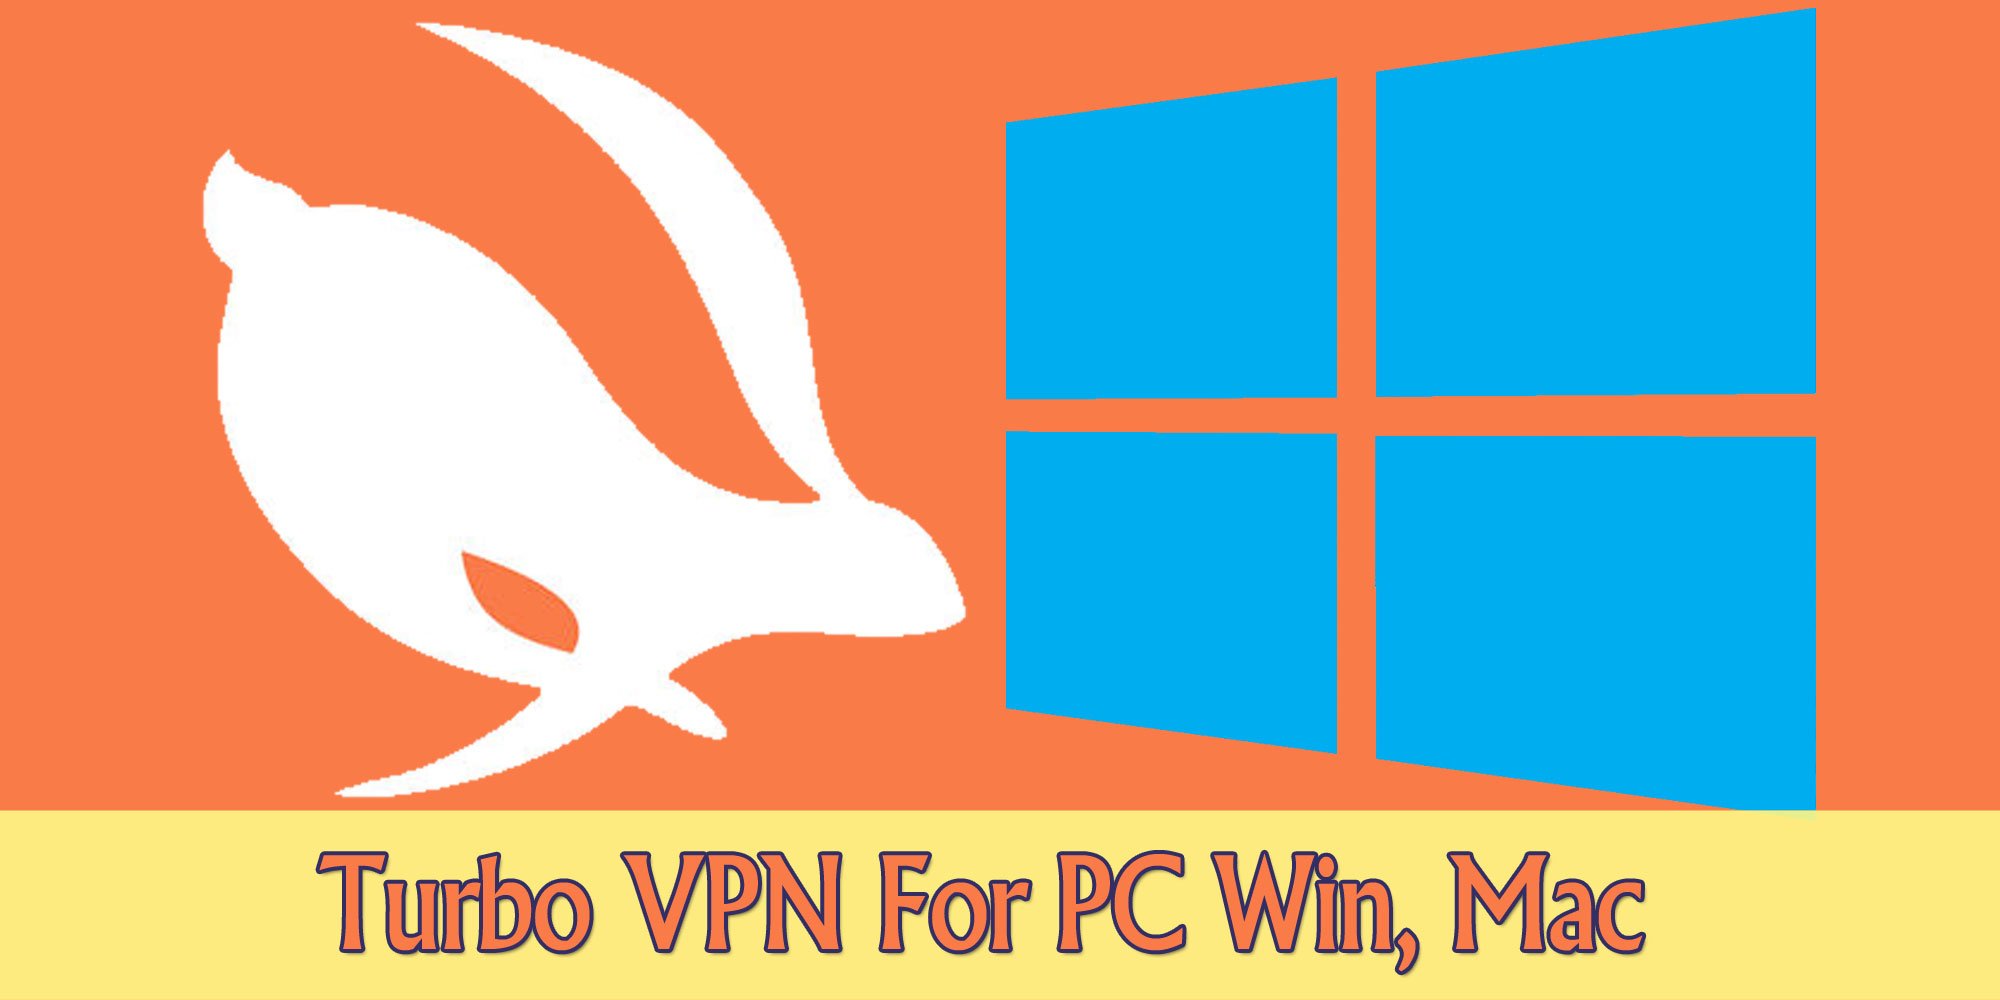 Download Turbo VPN for PC Windows 10/7/8 Laptop